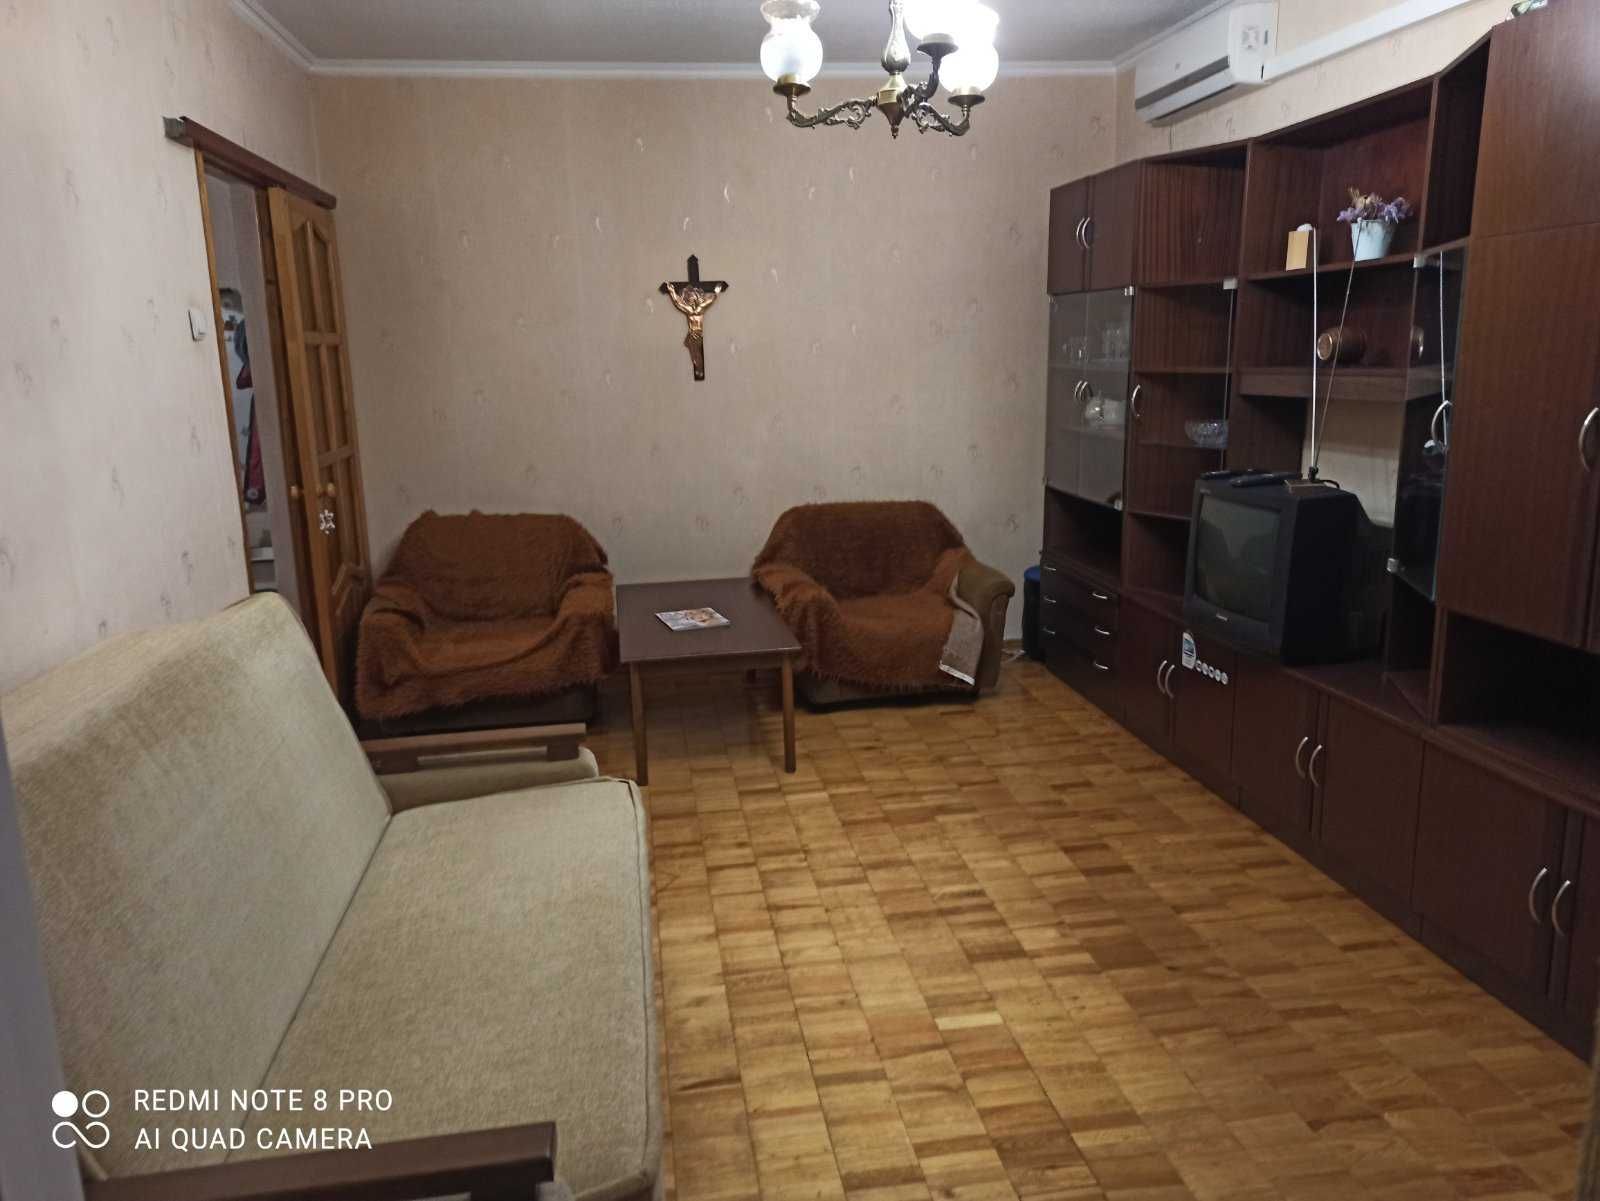 Данькевича, 1-к отличная квартира, Троещина, метро Почайна Дарница